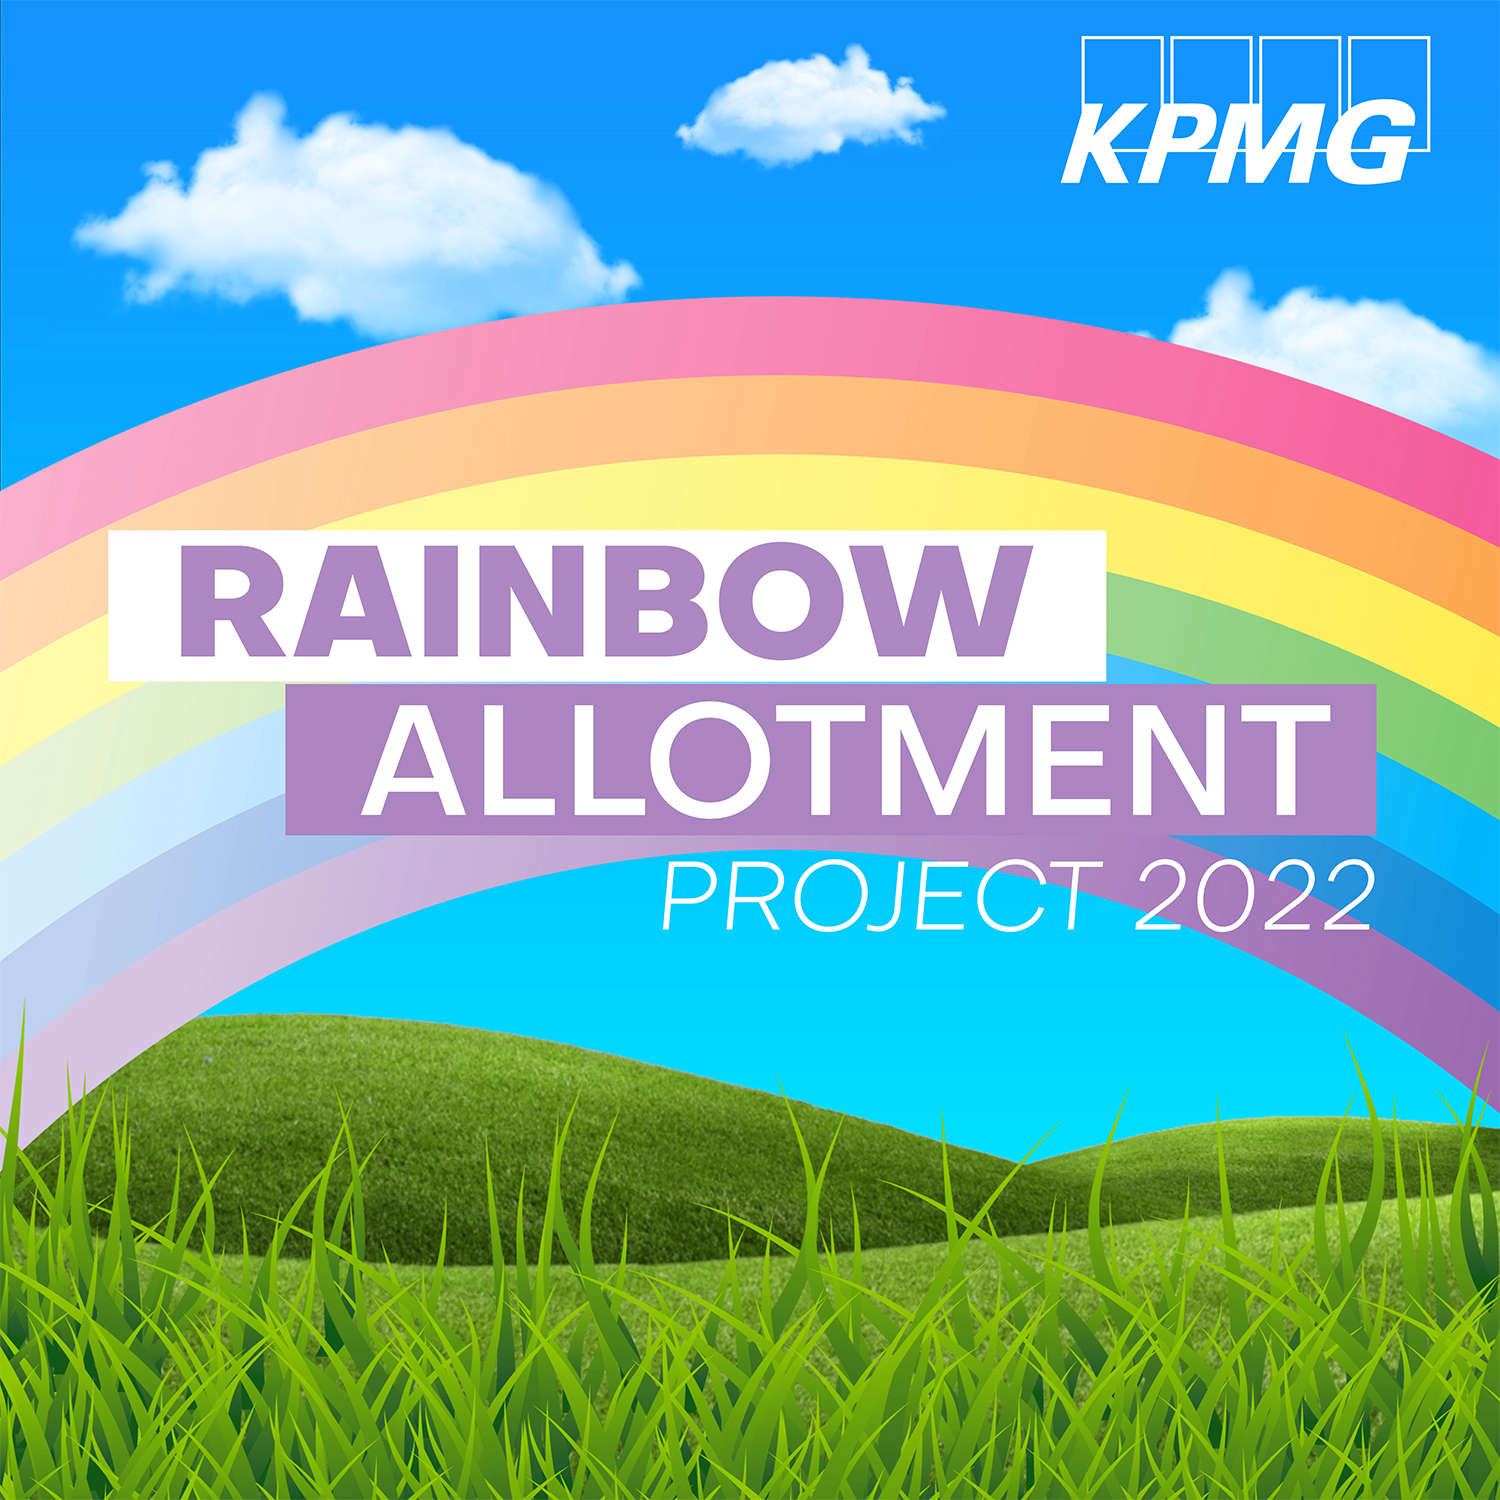 The KPMG Rainbow Allotment Project 2022